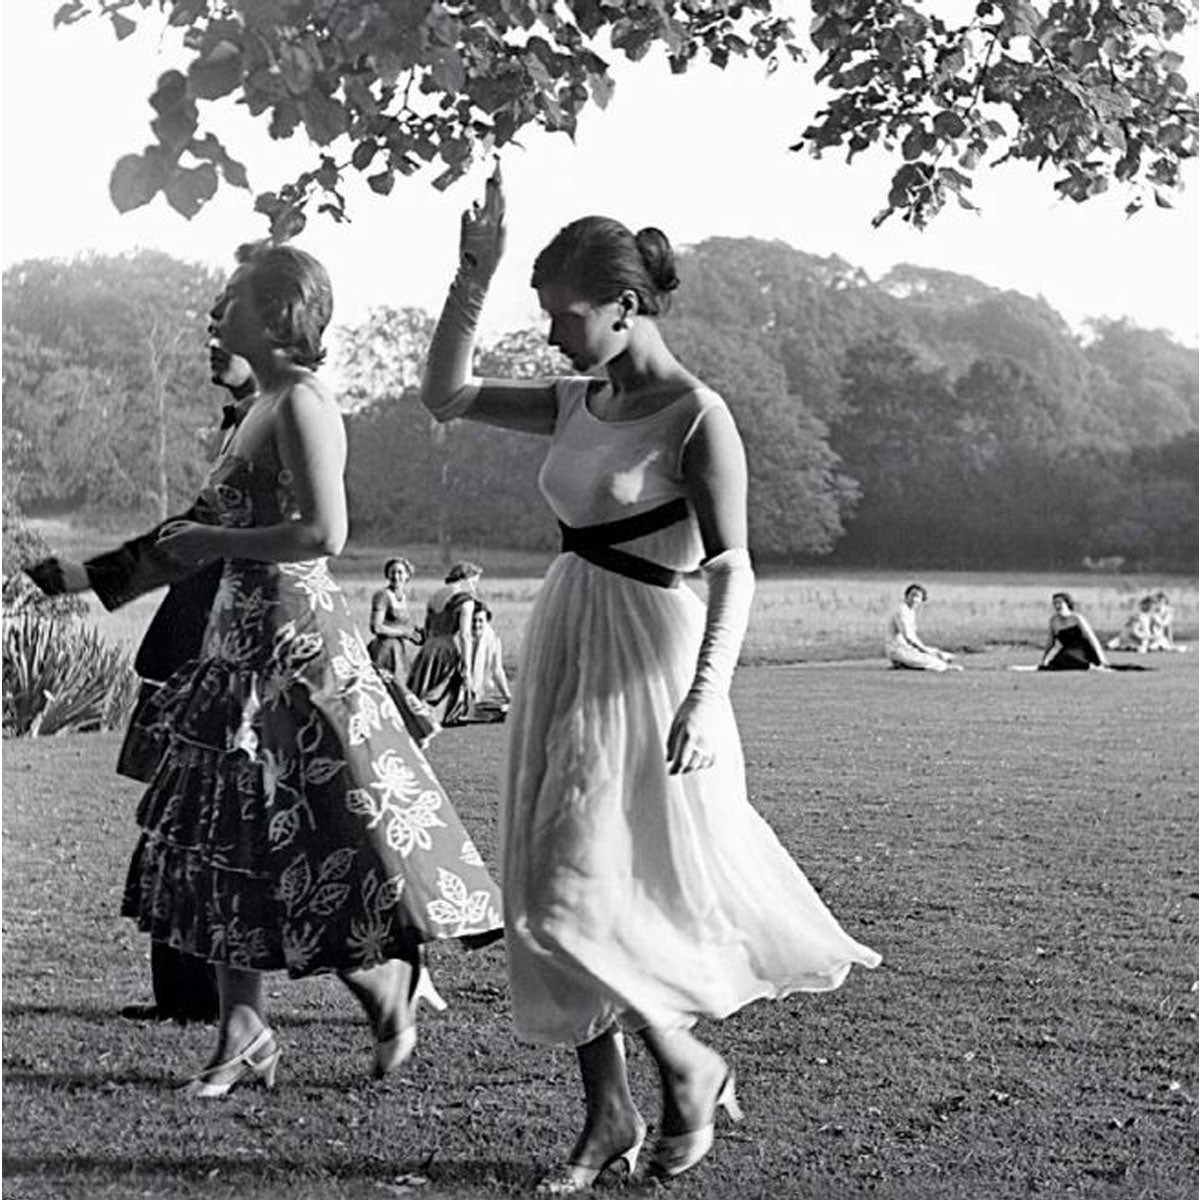 Members of the audience strolling on the lawns, 1955, Glyndebourne Greetings Card